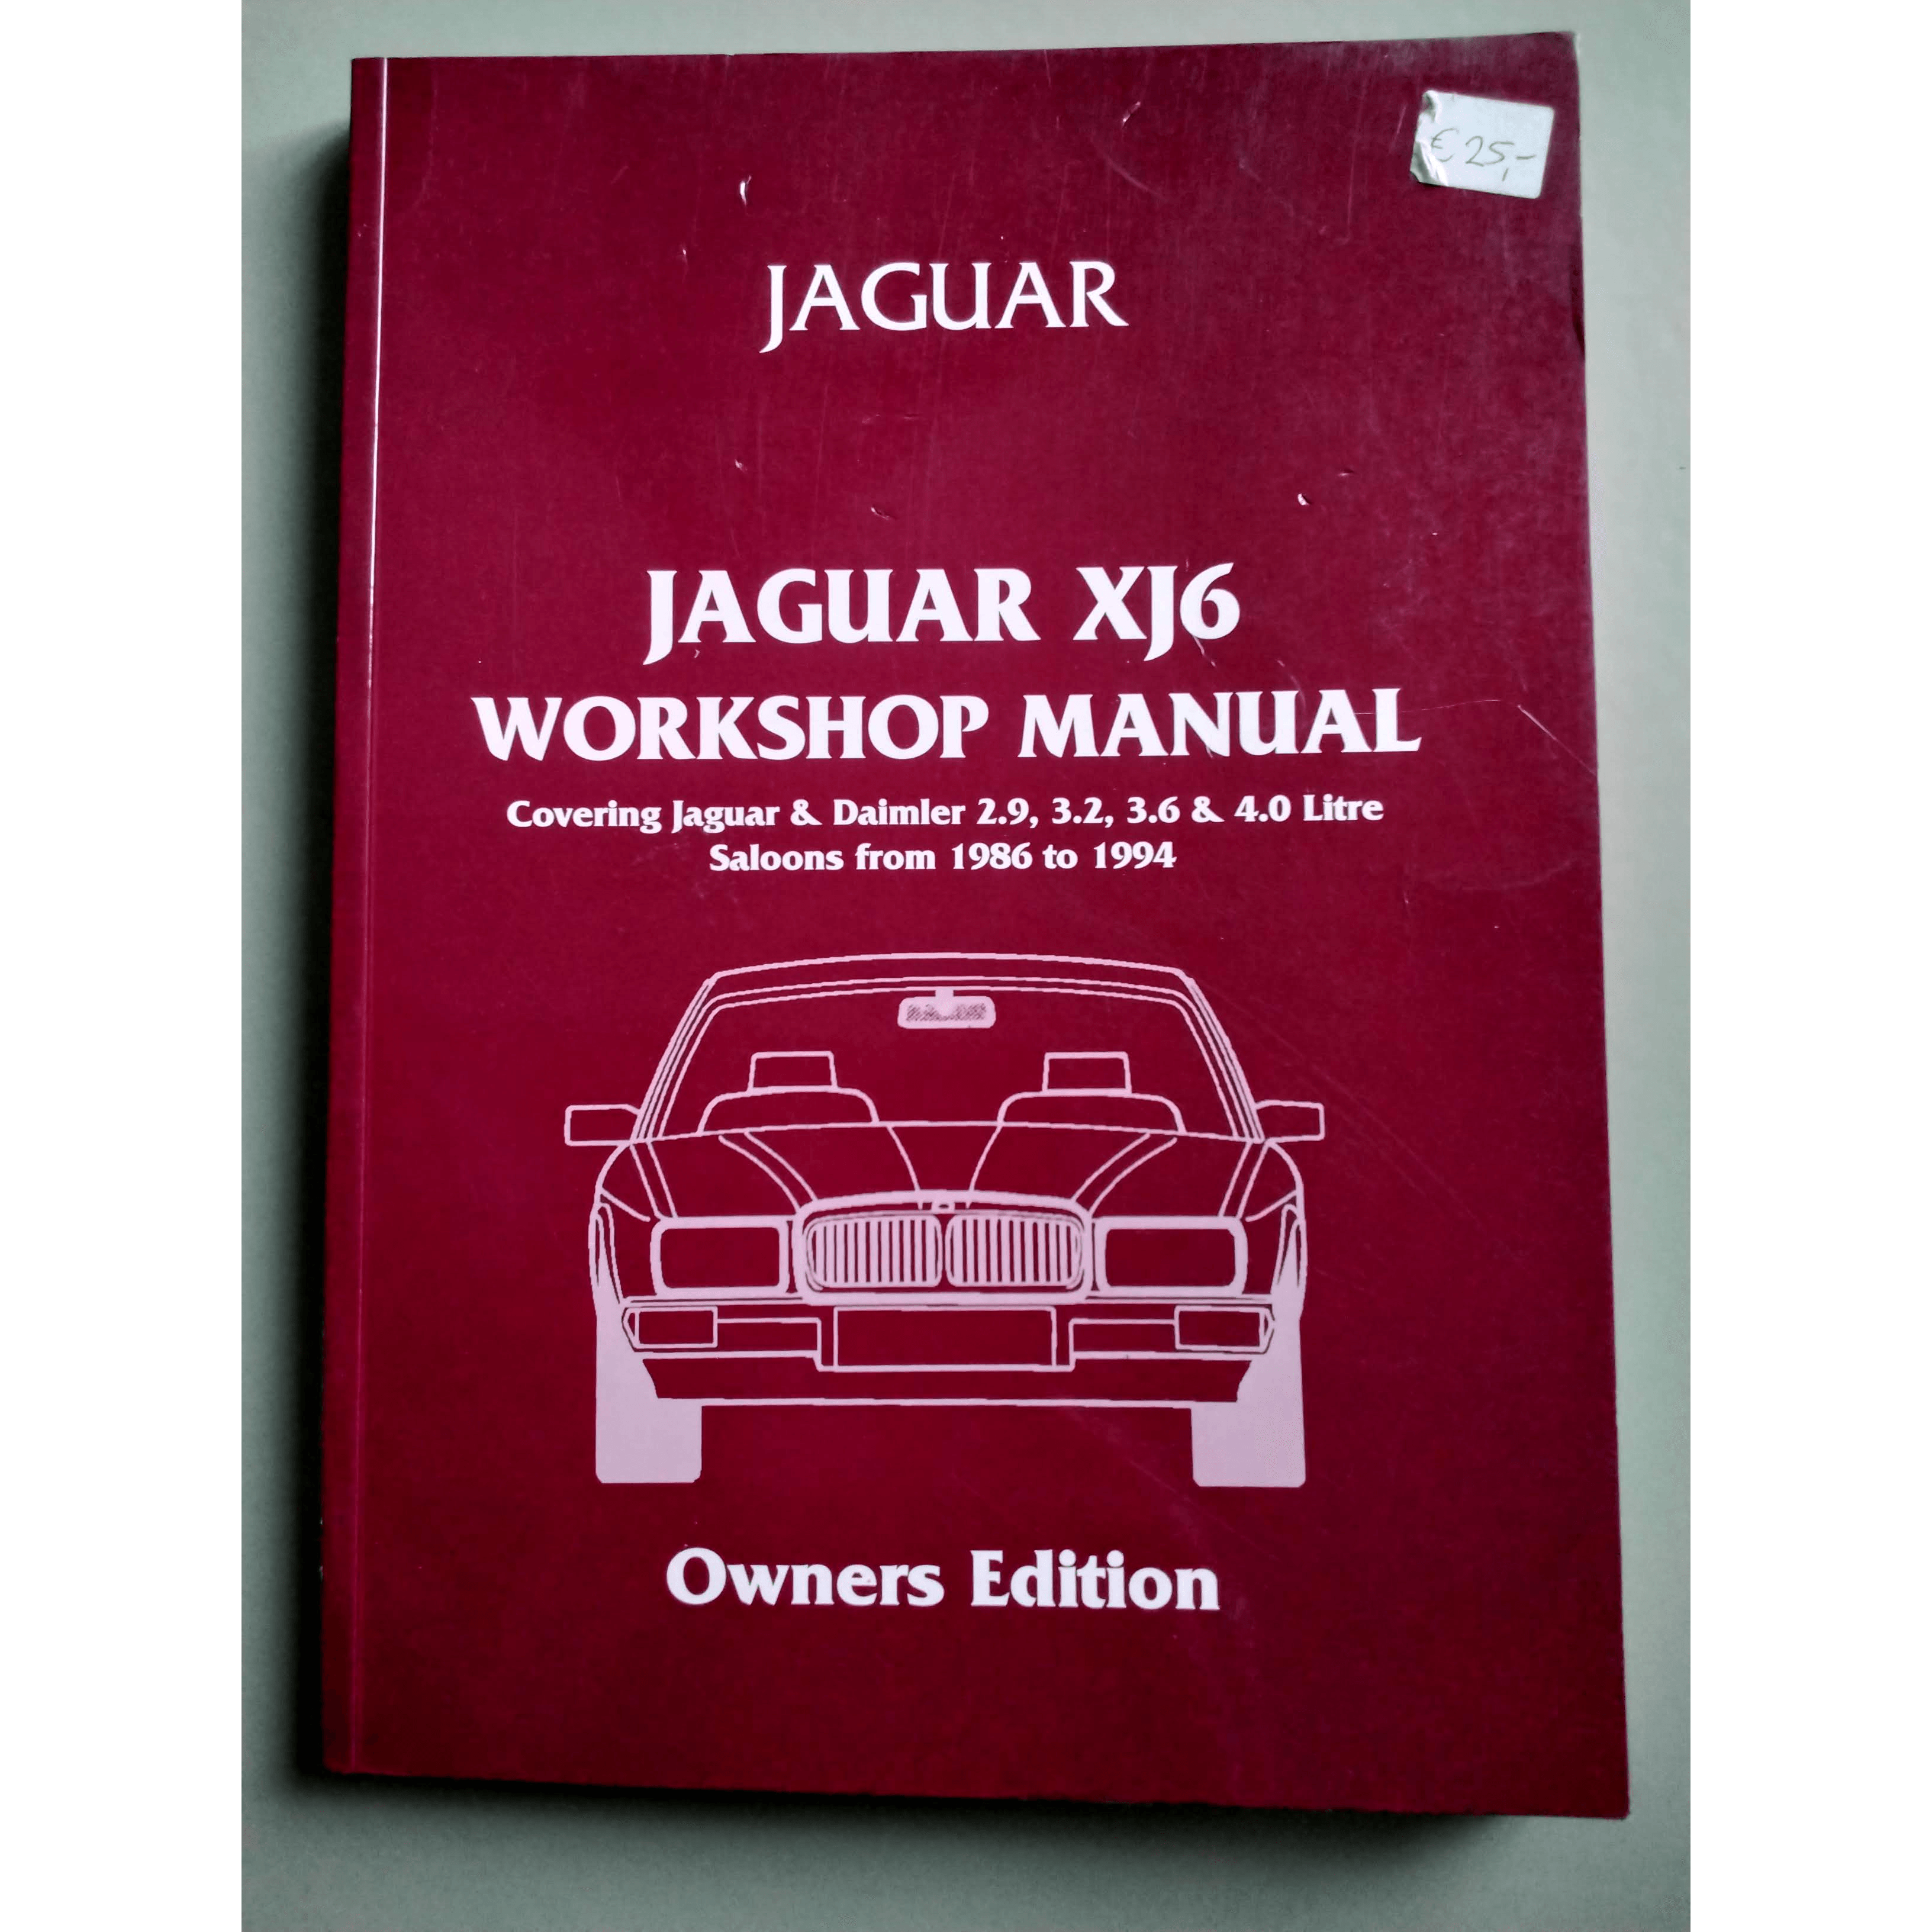 Jaguar Xj6 Workshop Manual Owners Edition - Berry Smink British Car Parts